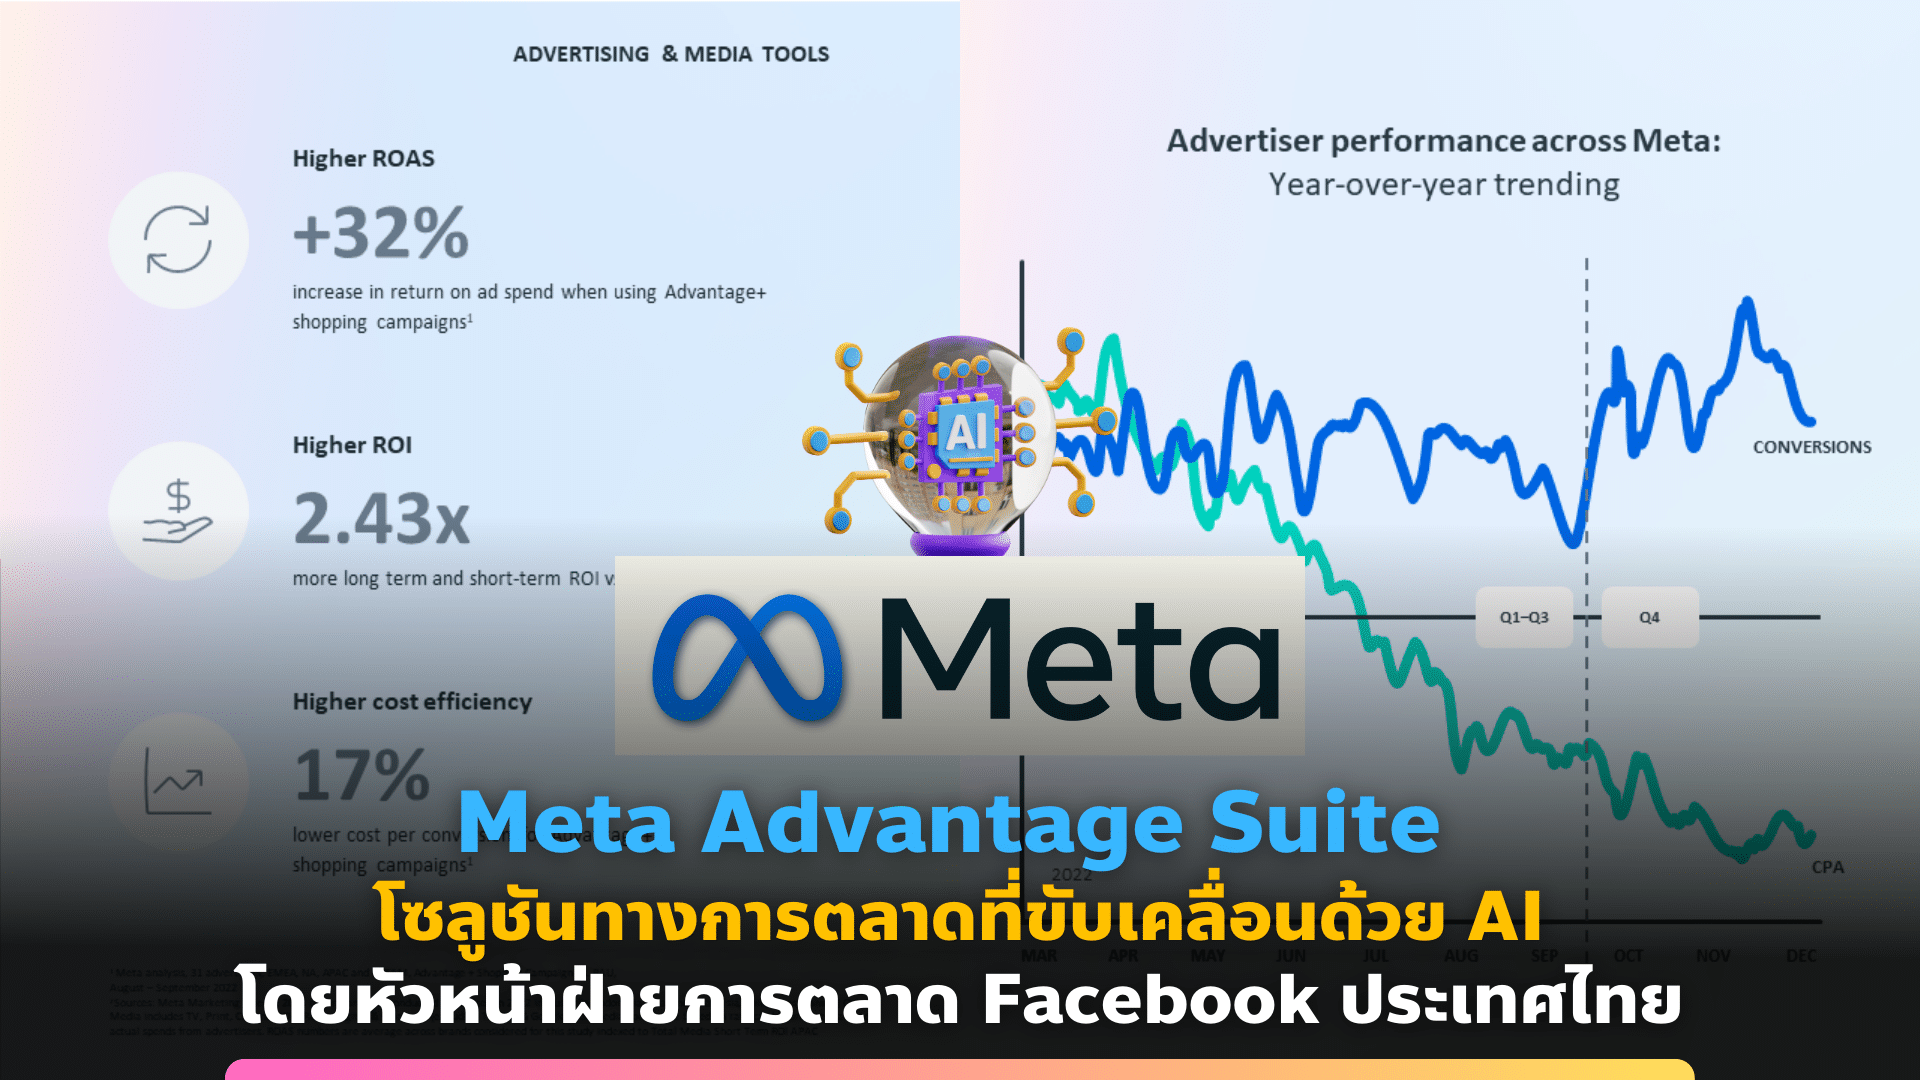 Meta Advantage Suite โซลูชันทางการตลาดที่ขับเคลื่อนด้วย AI